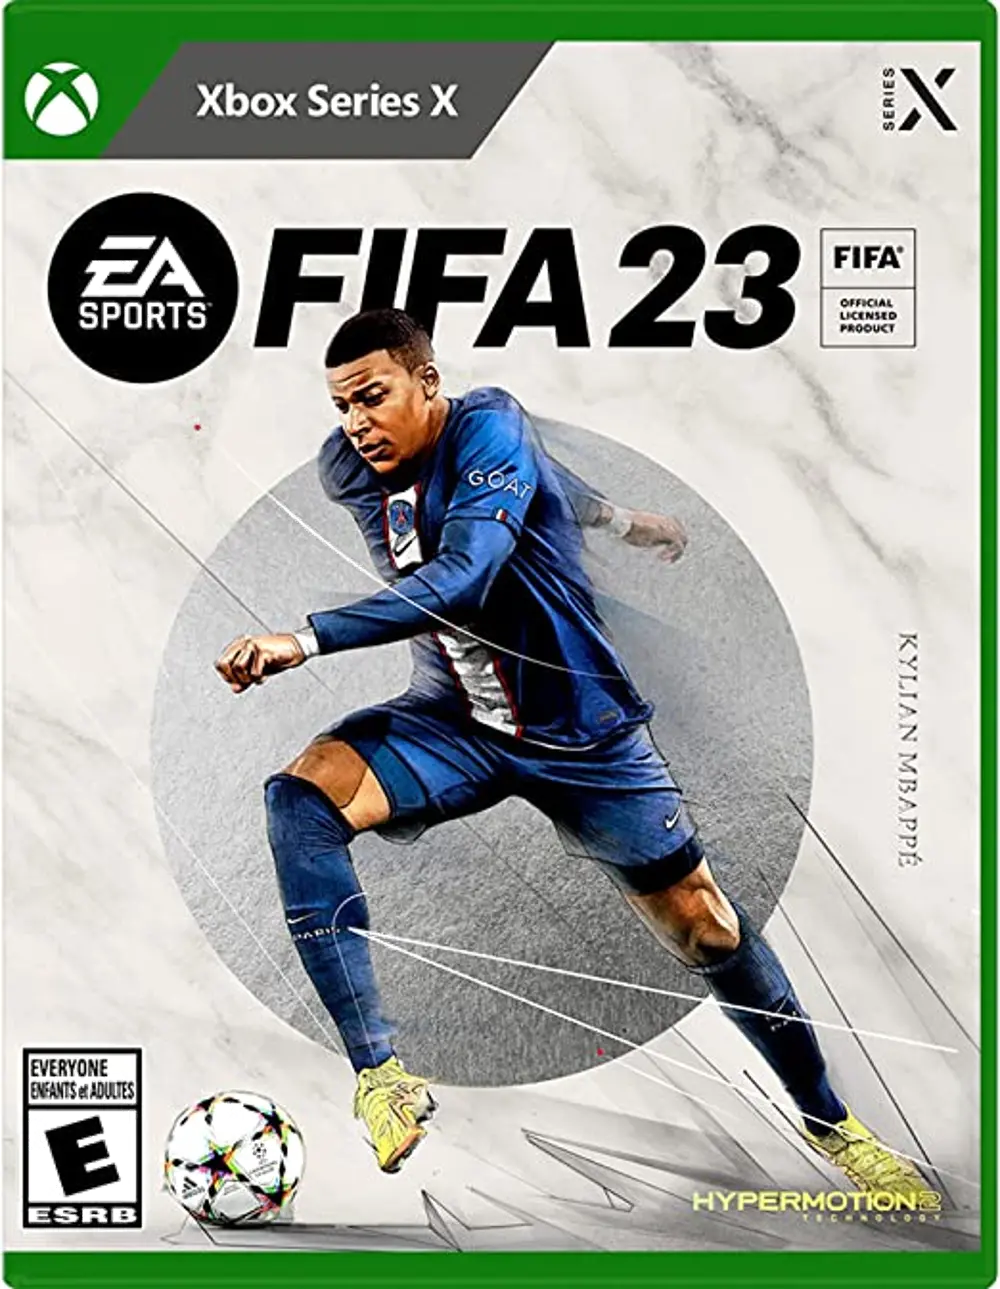 XBSX/FIFA_23 FIFA 23 Standard Edition - Xbox Series X-1